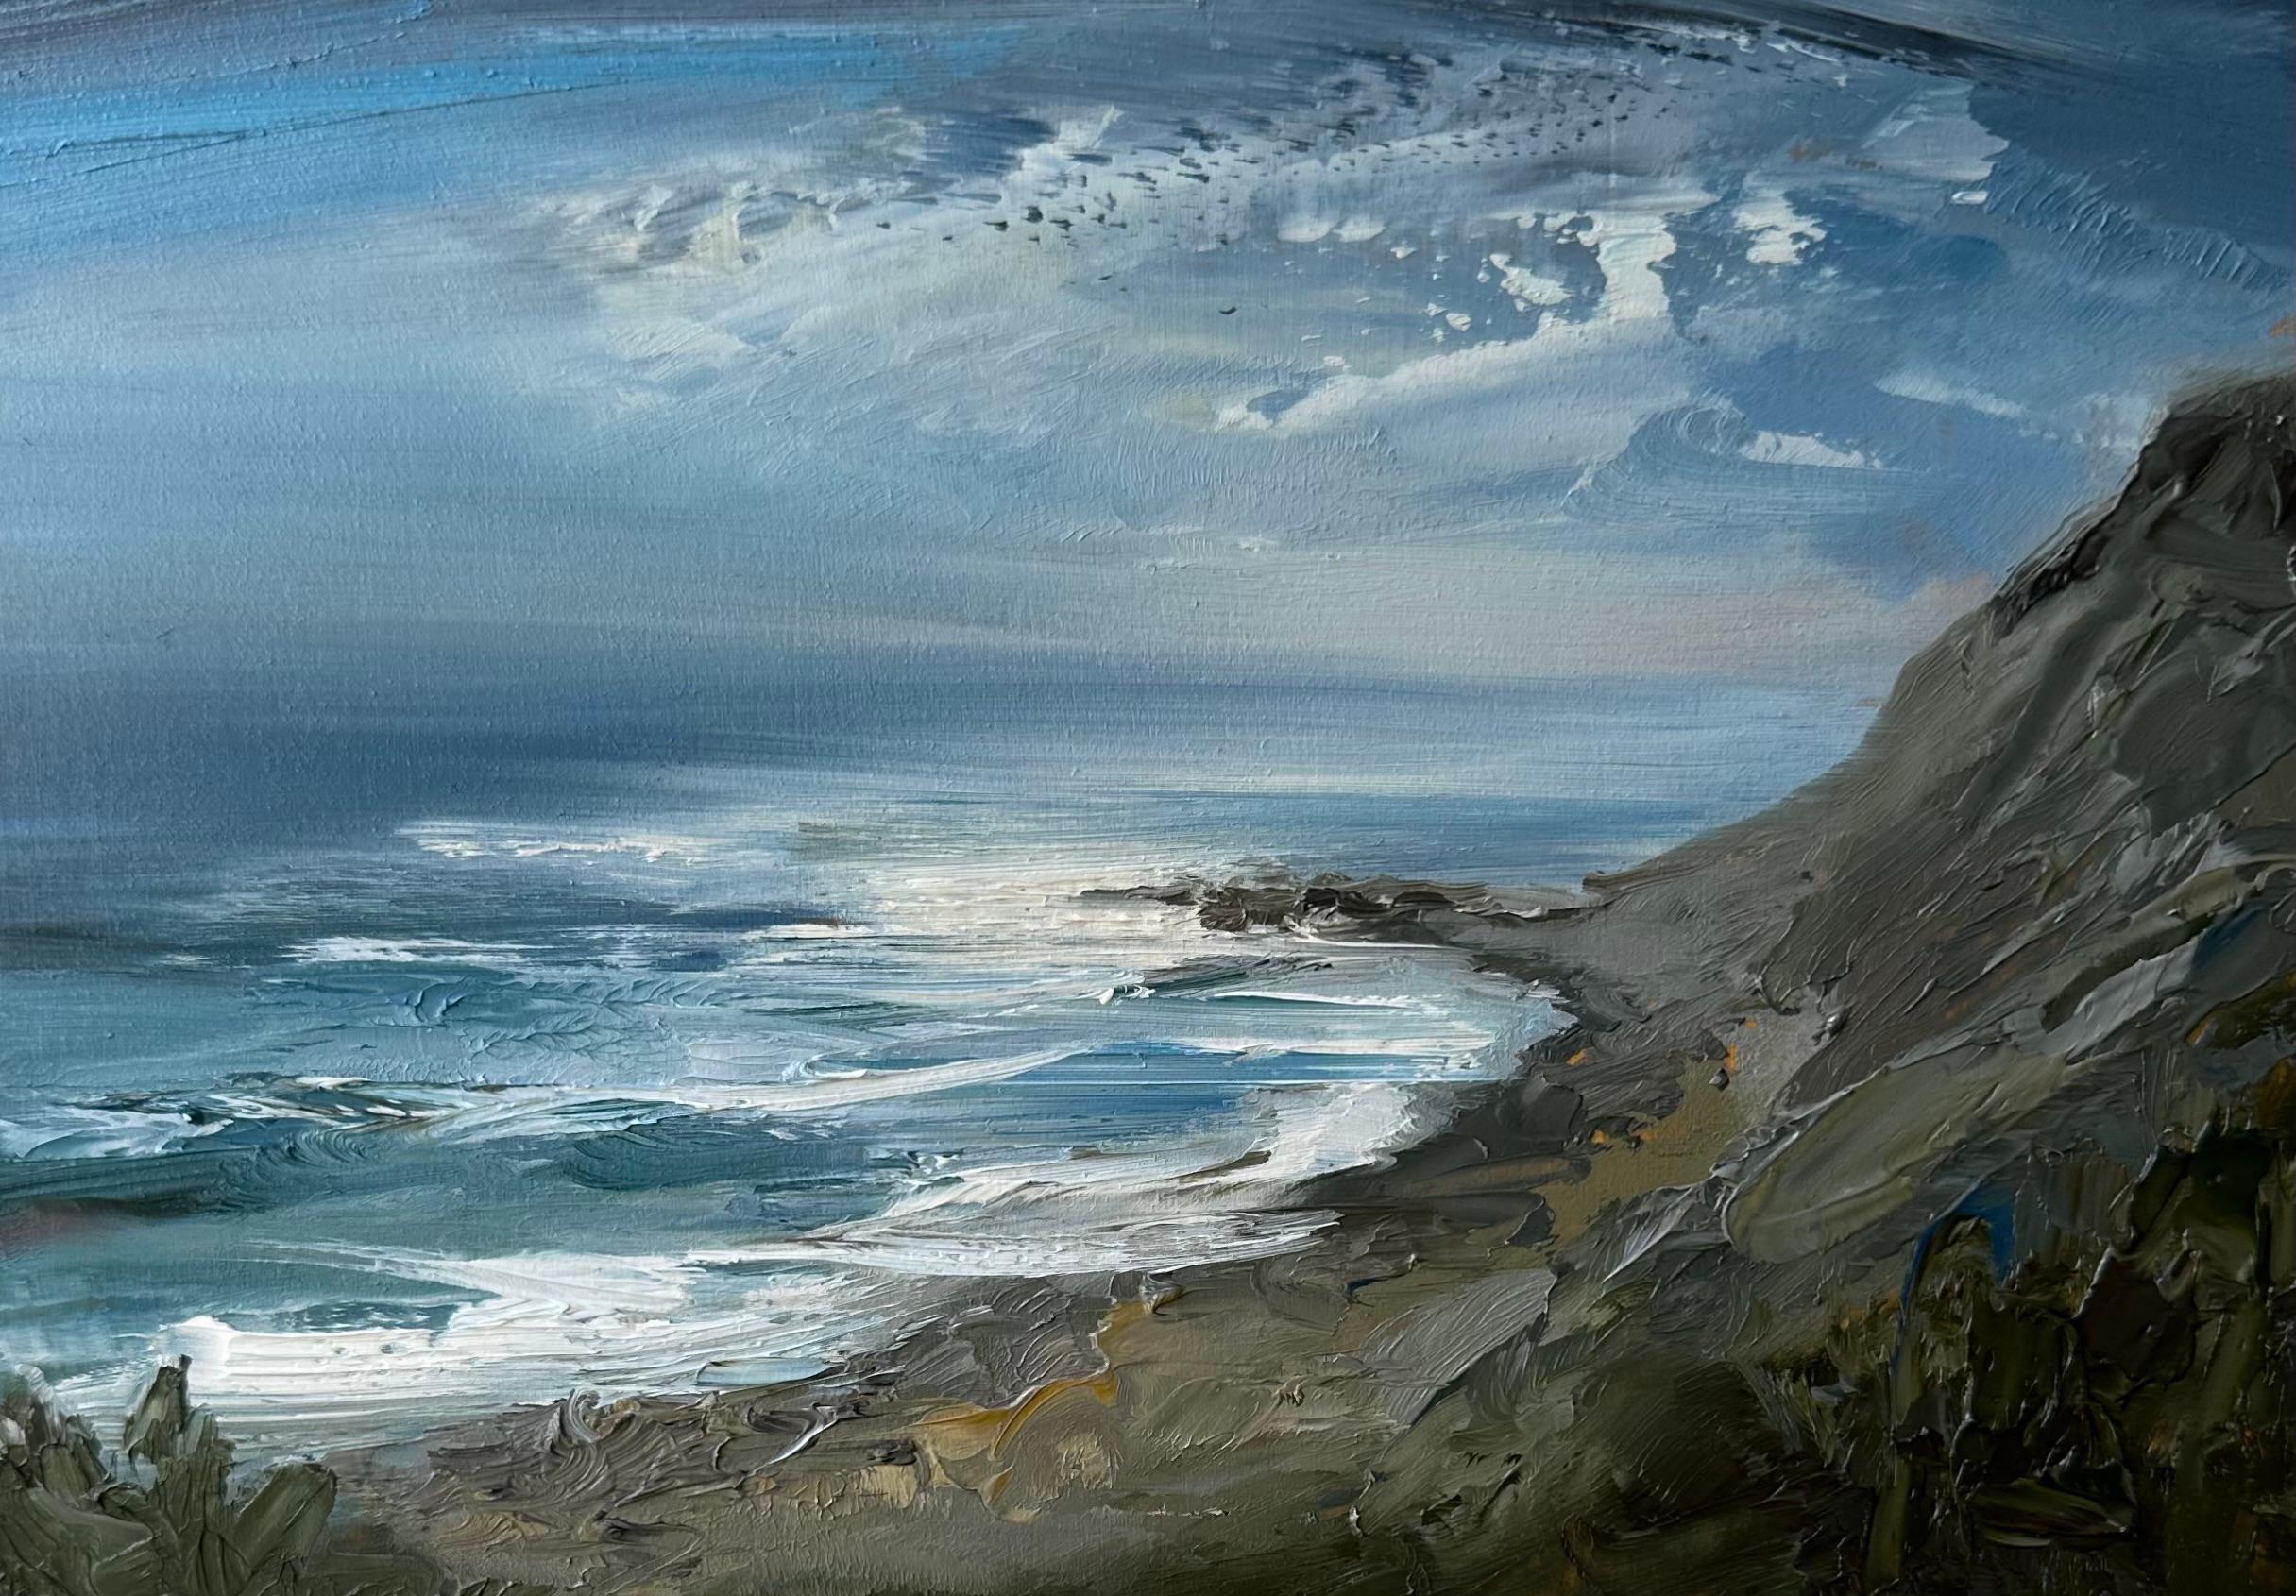 Whitney Knapp Landscape Painting - "Moonlit Bluff", a landscape oil painting with a picturesque shore view